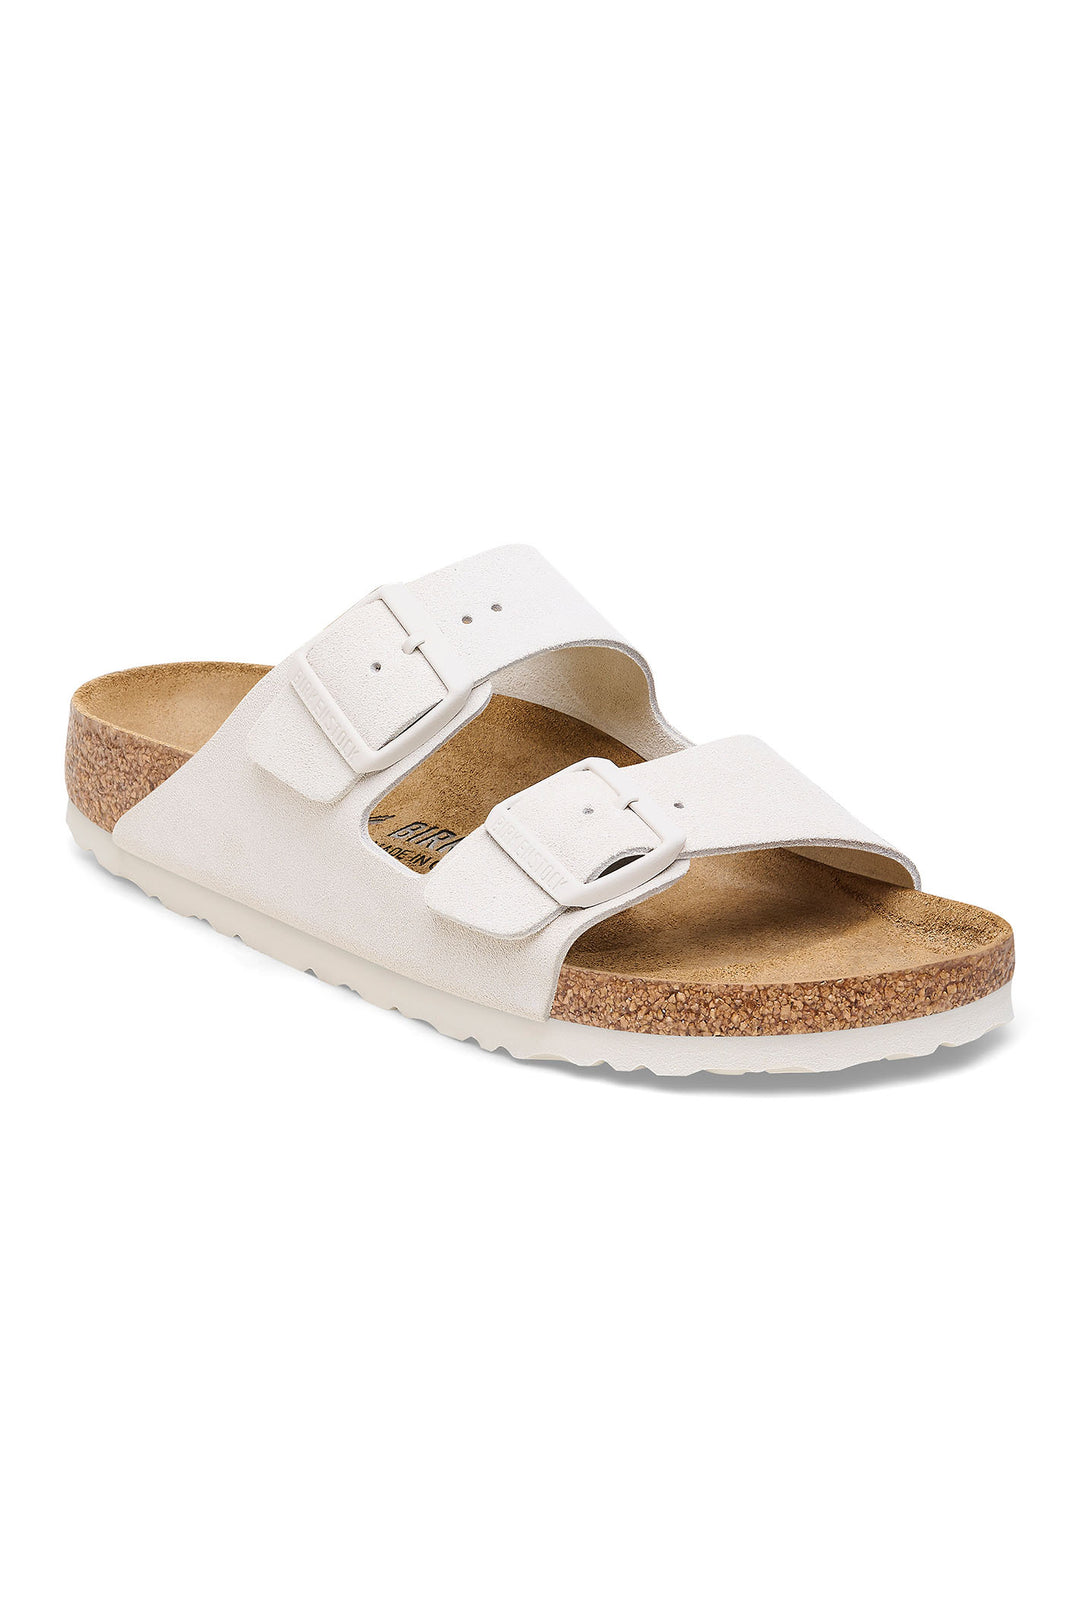 Birkenstock Arizona 1026842 Antique White Suede Narrow Fit Sandal - Shirley Allum Boutique